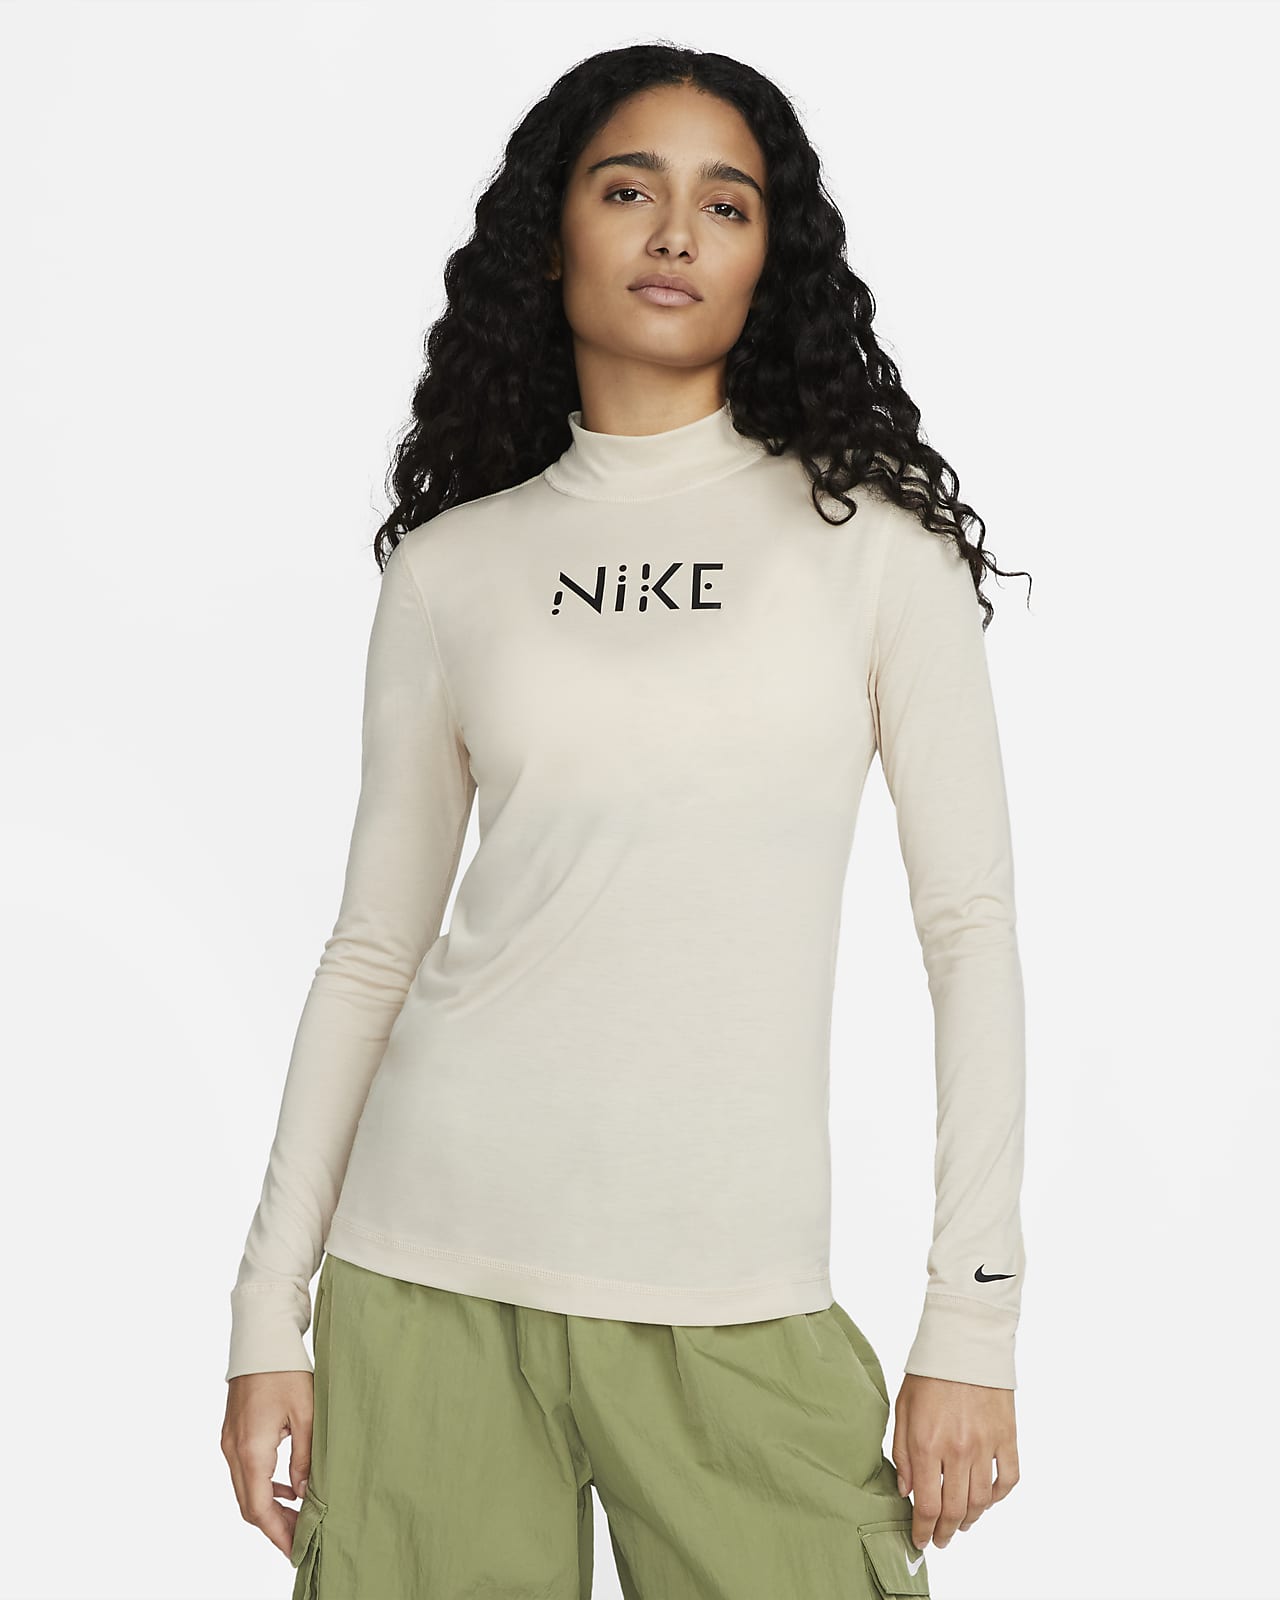 Serena Williams Design Crew Women's Mock-Neck Long-Sleeve T-Shirt. Nike.com